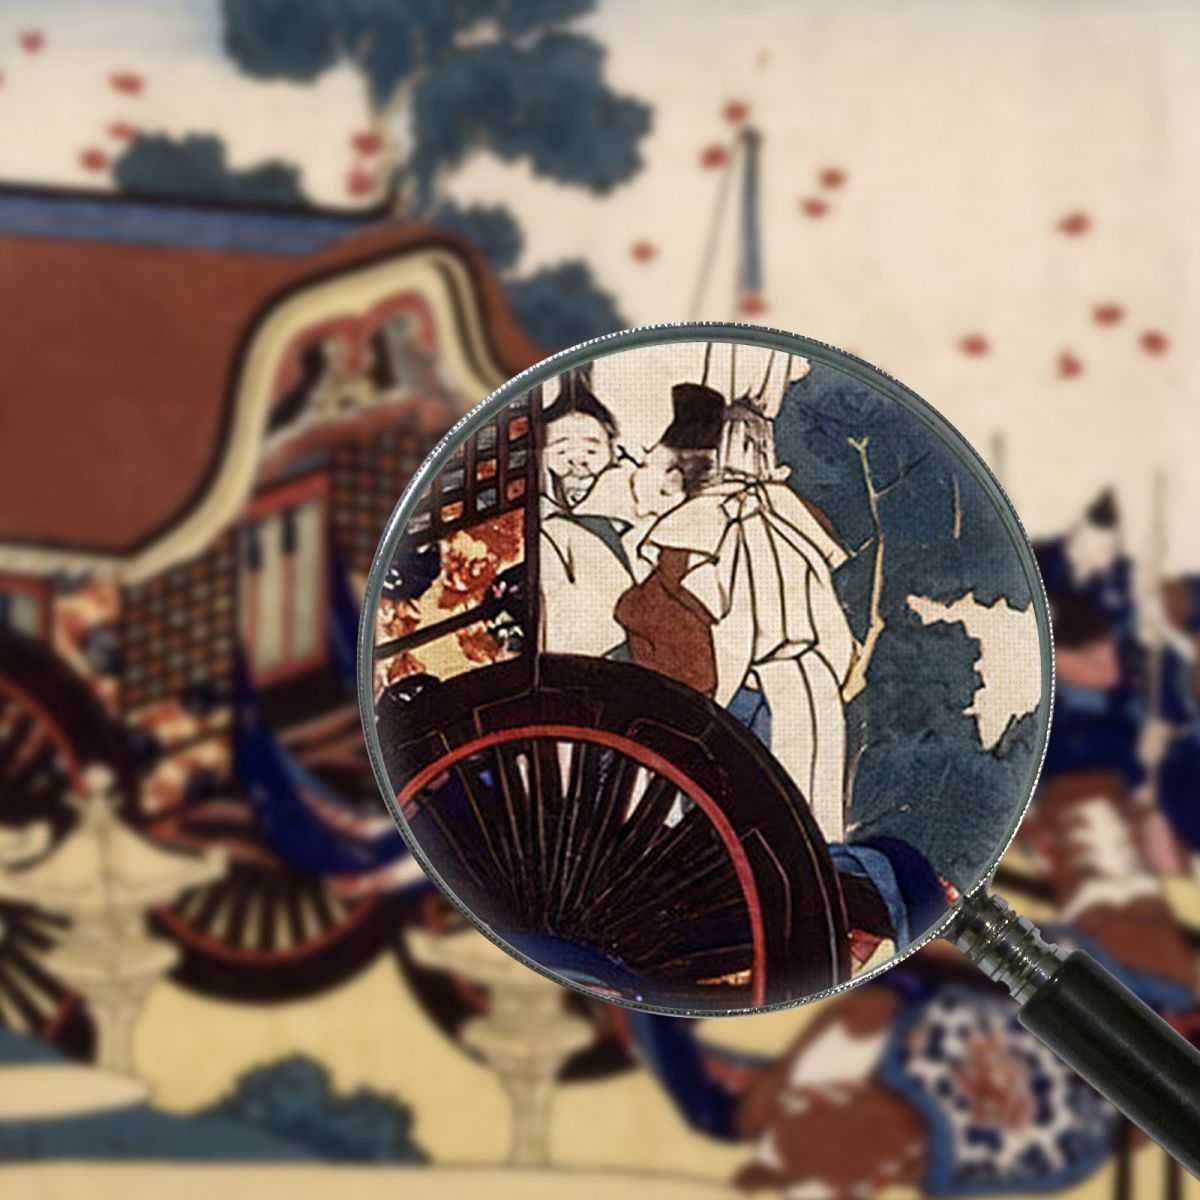 Il Carro Dei Buoi Hokusai Katsushika quadro stampa su tela KHK19